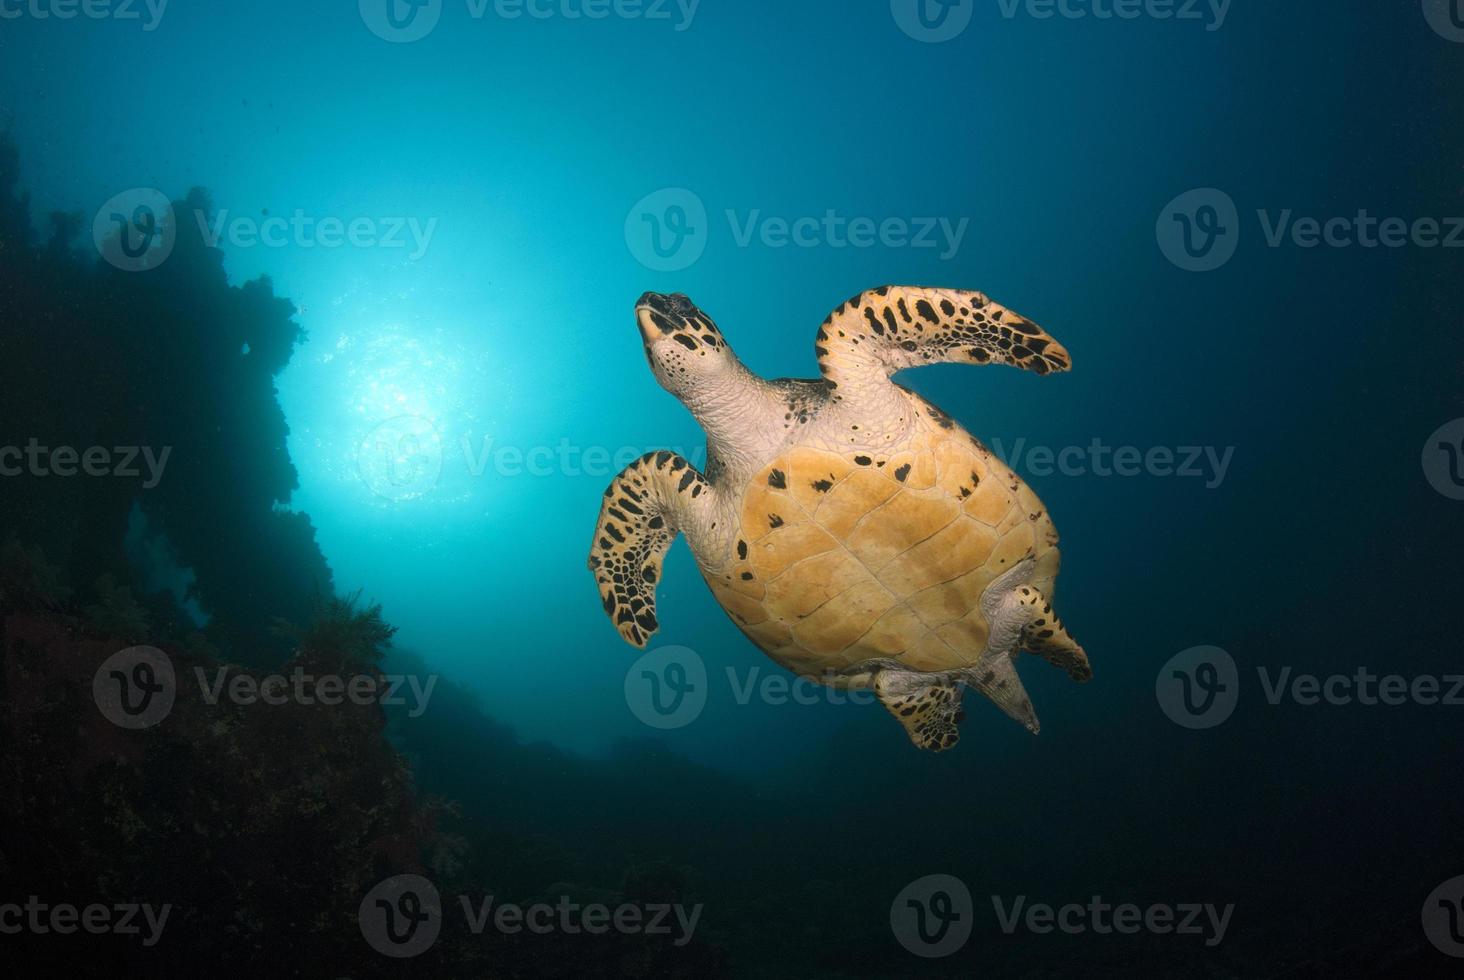 tartaruga-de-pente em recifes de coral. foto